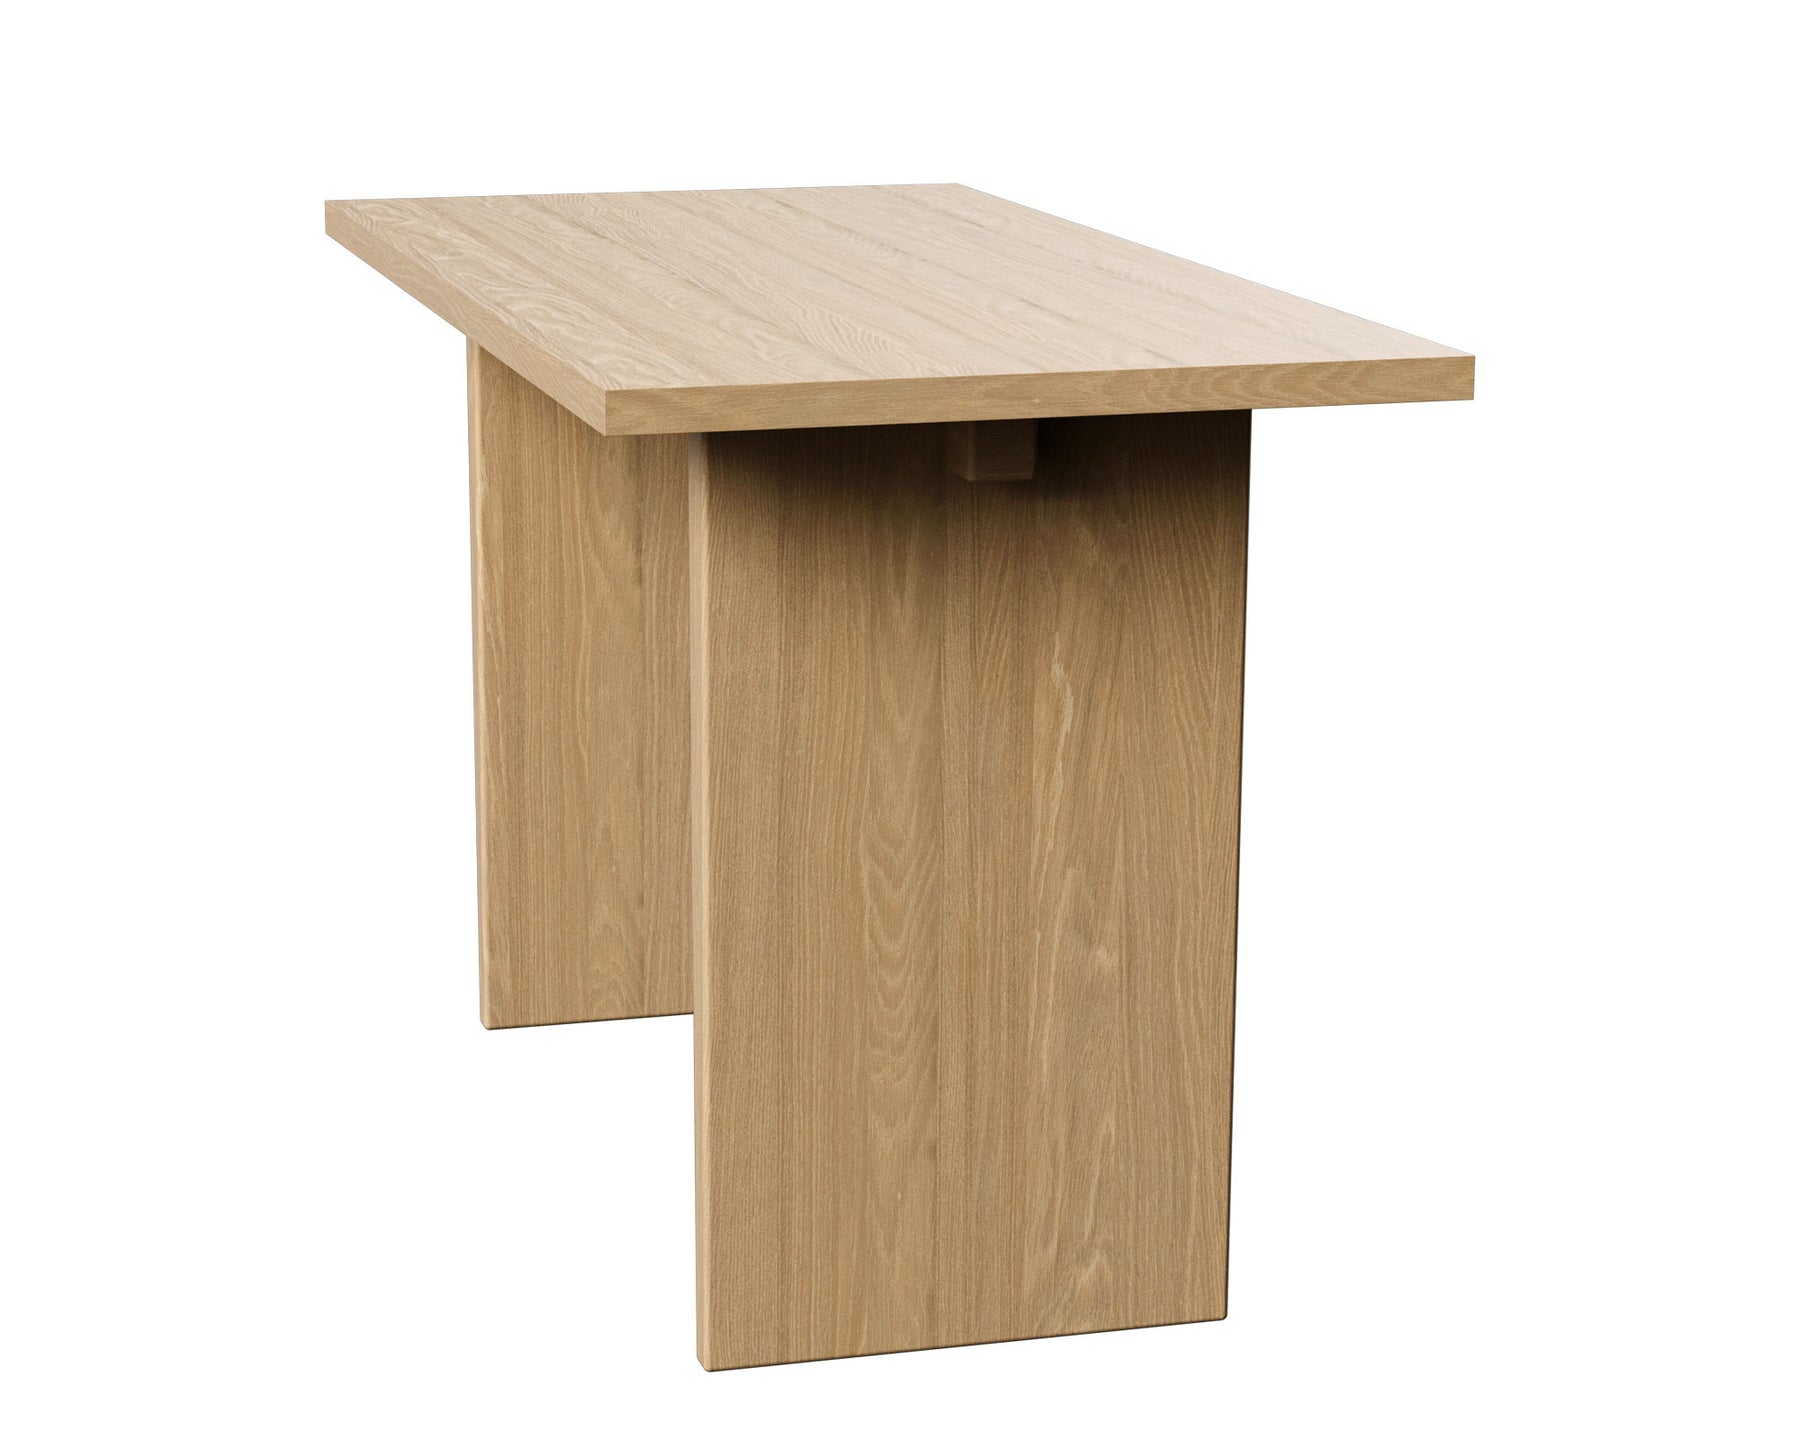 Light oak Wood Desk | DSHOP